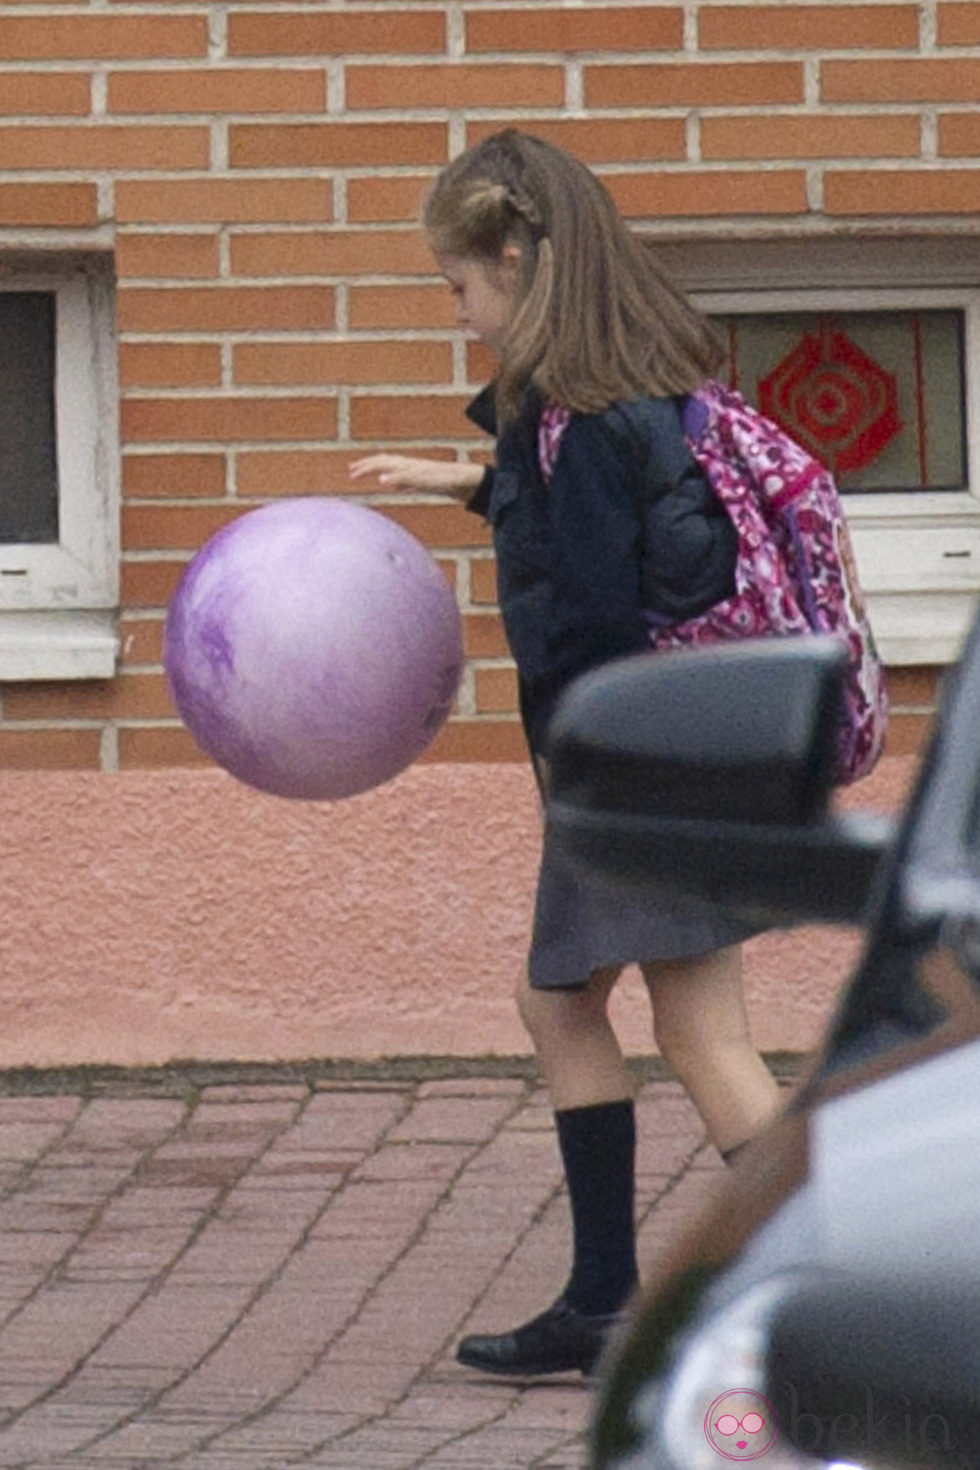 58532_infanta-leonor-juega-pelota-entrar-colegio.jpg